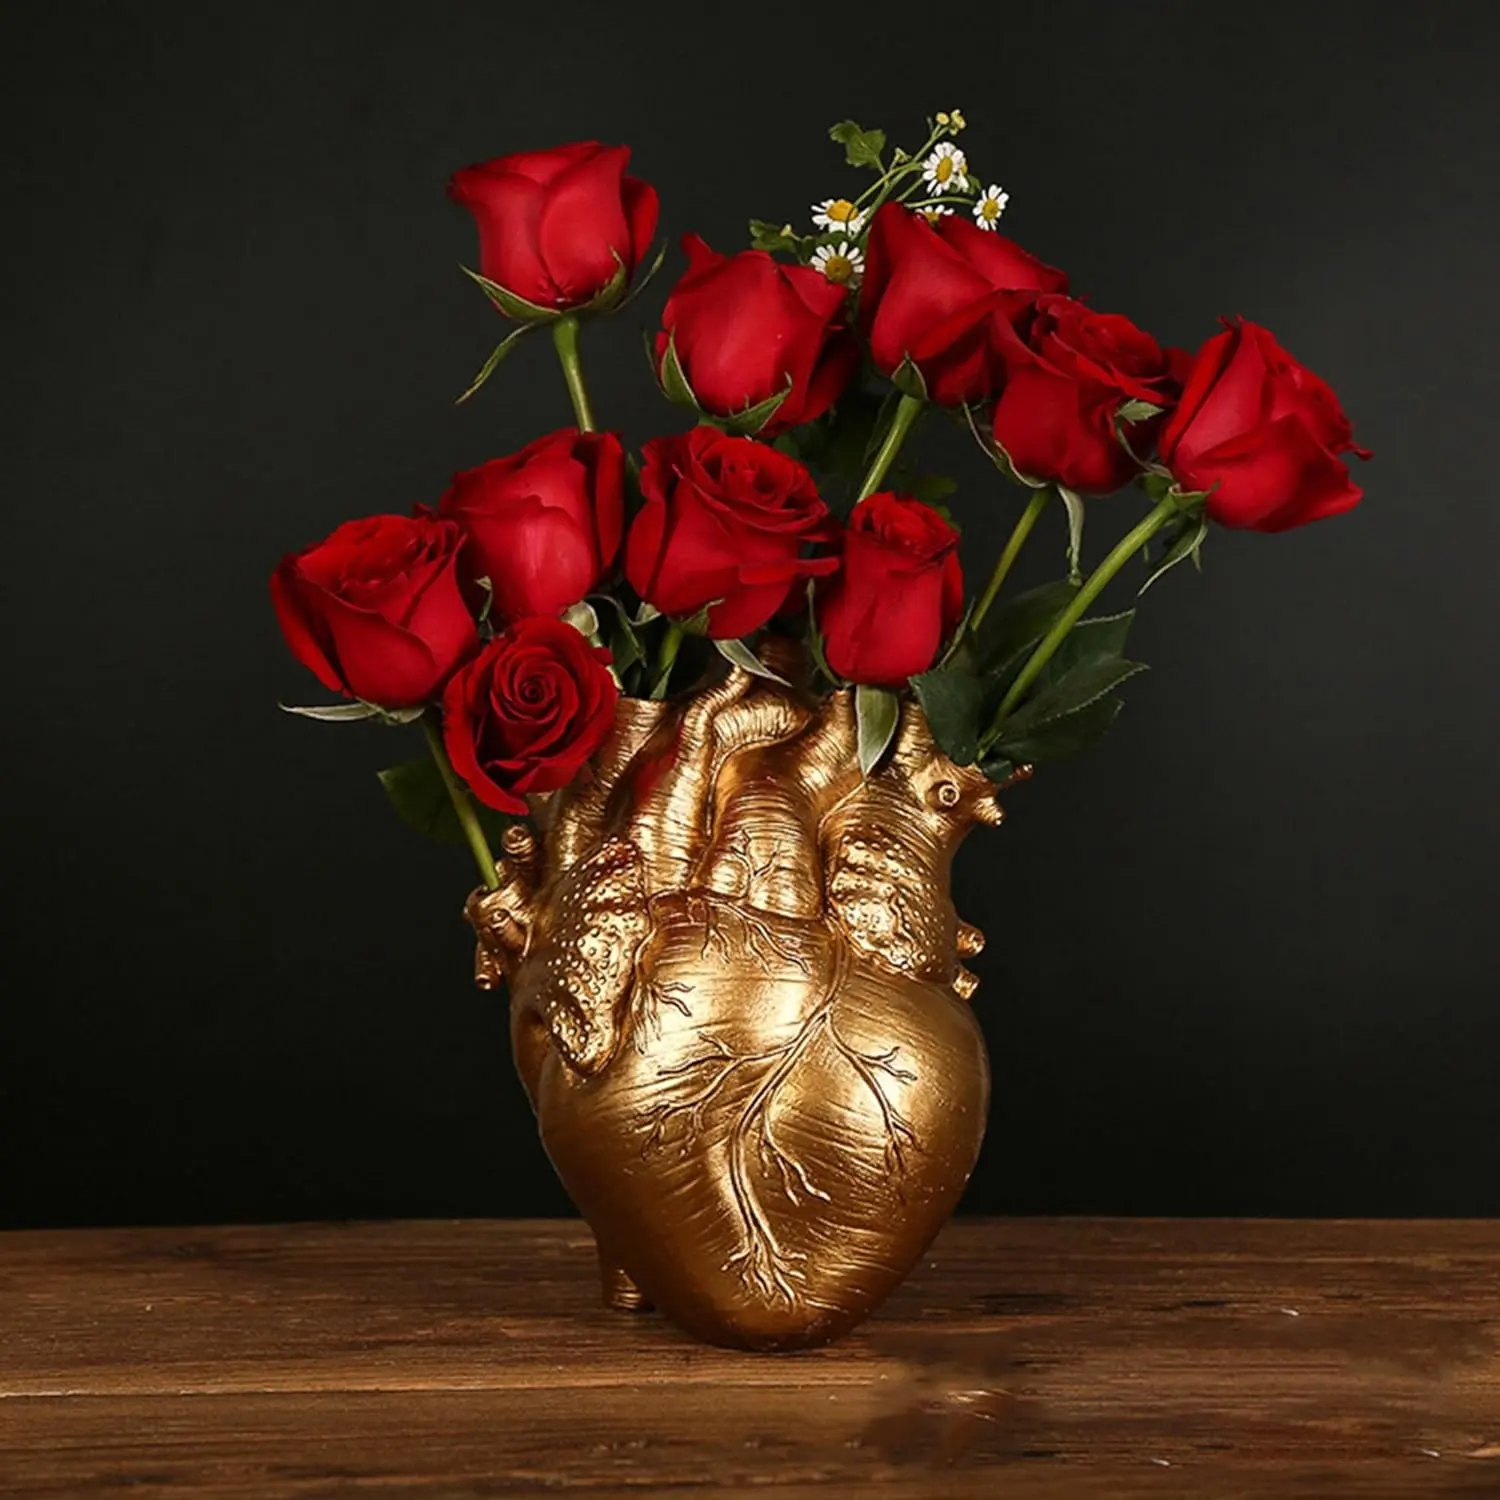 Gold Anatomical Heart Vase Resin Flower Pot Desktop Ornament Heart Shaped Vases for Flowers Heart Sculptures Home Decor